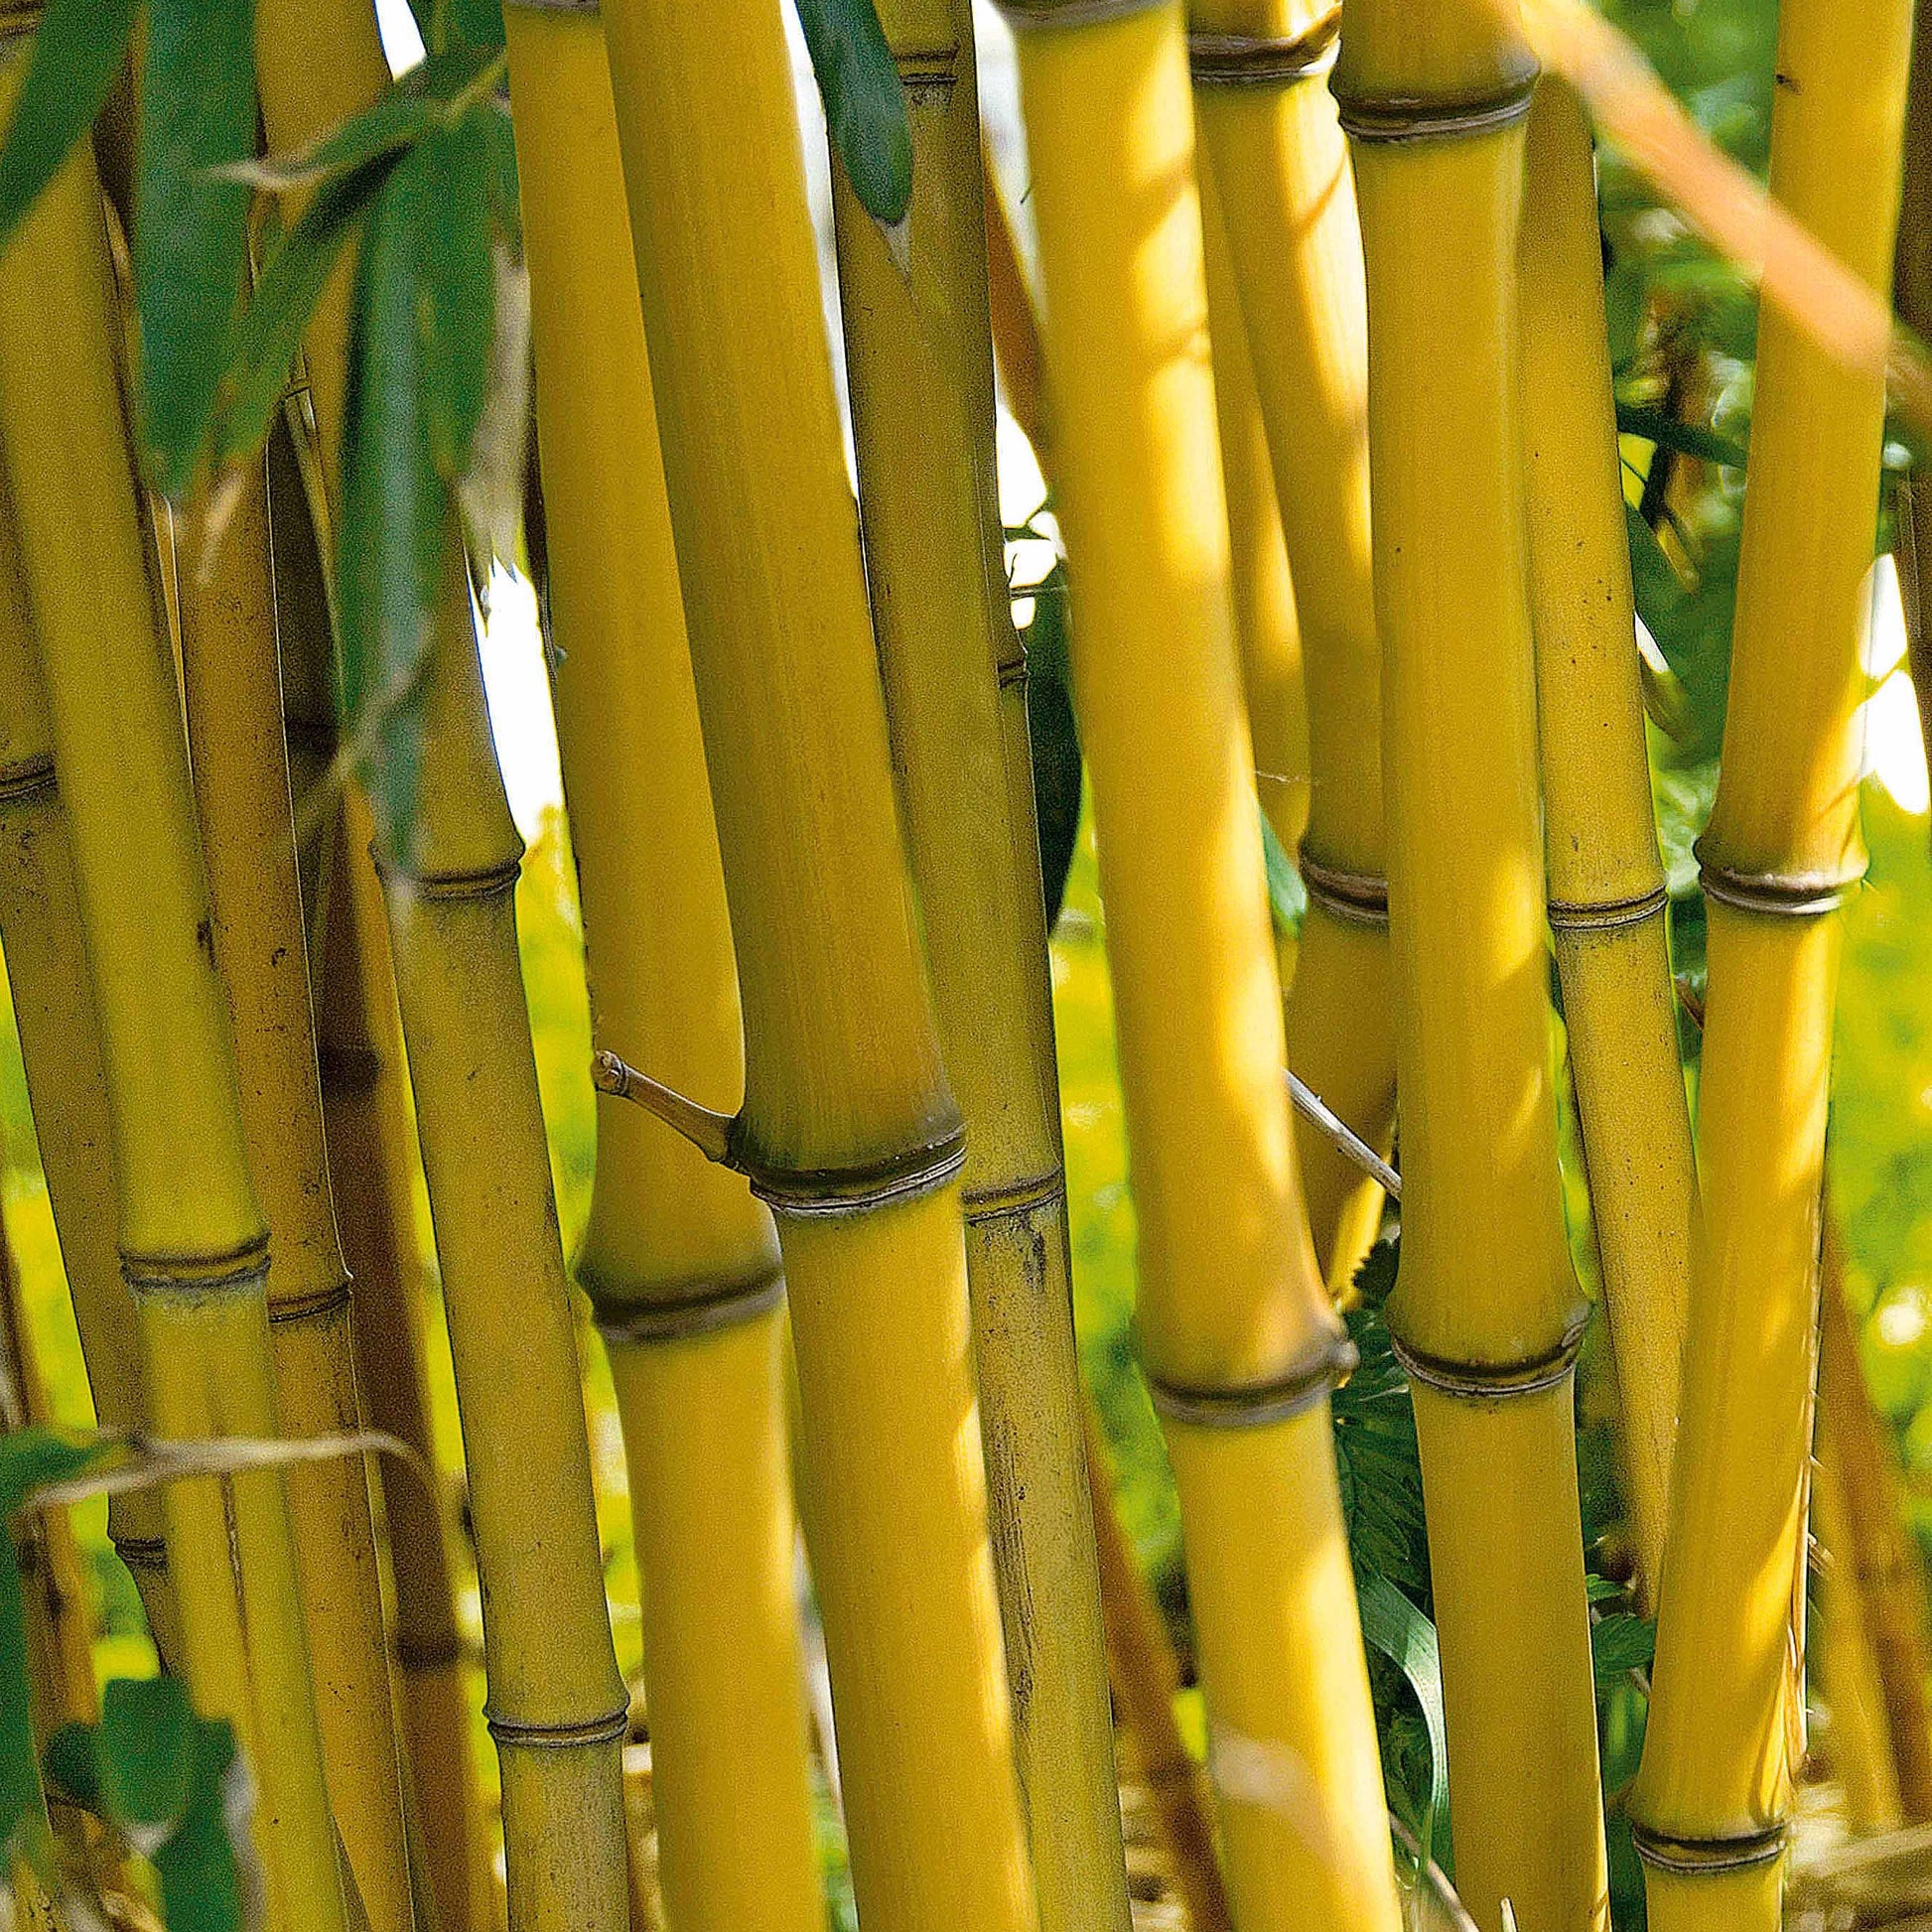 Bambus-Sammlung: grün, gelb, rot (x3) - Phyllostachys bissetii, aureosulcata Aureocaulis, Fargesia scabrida Asian Wonder